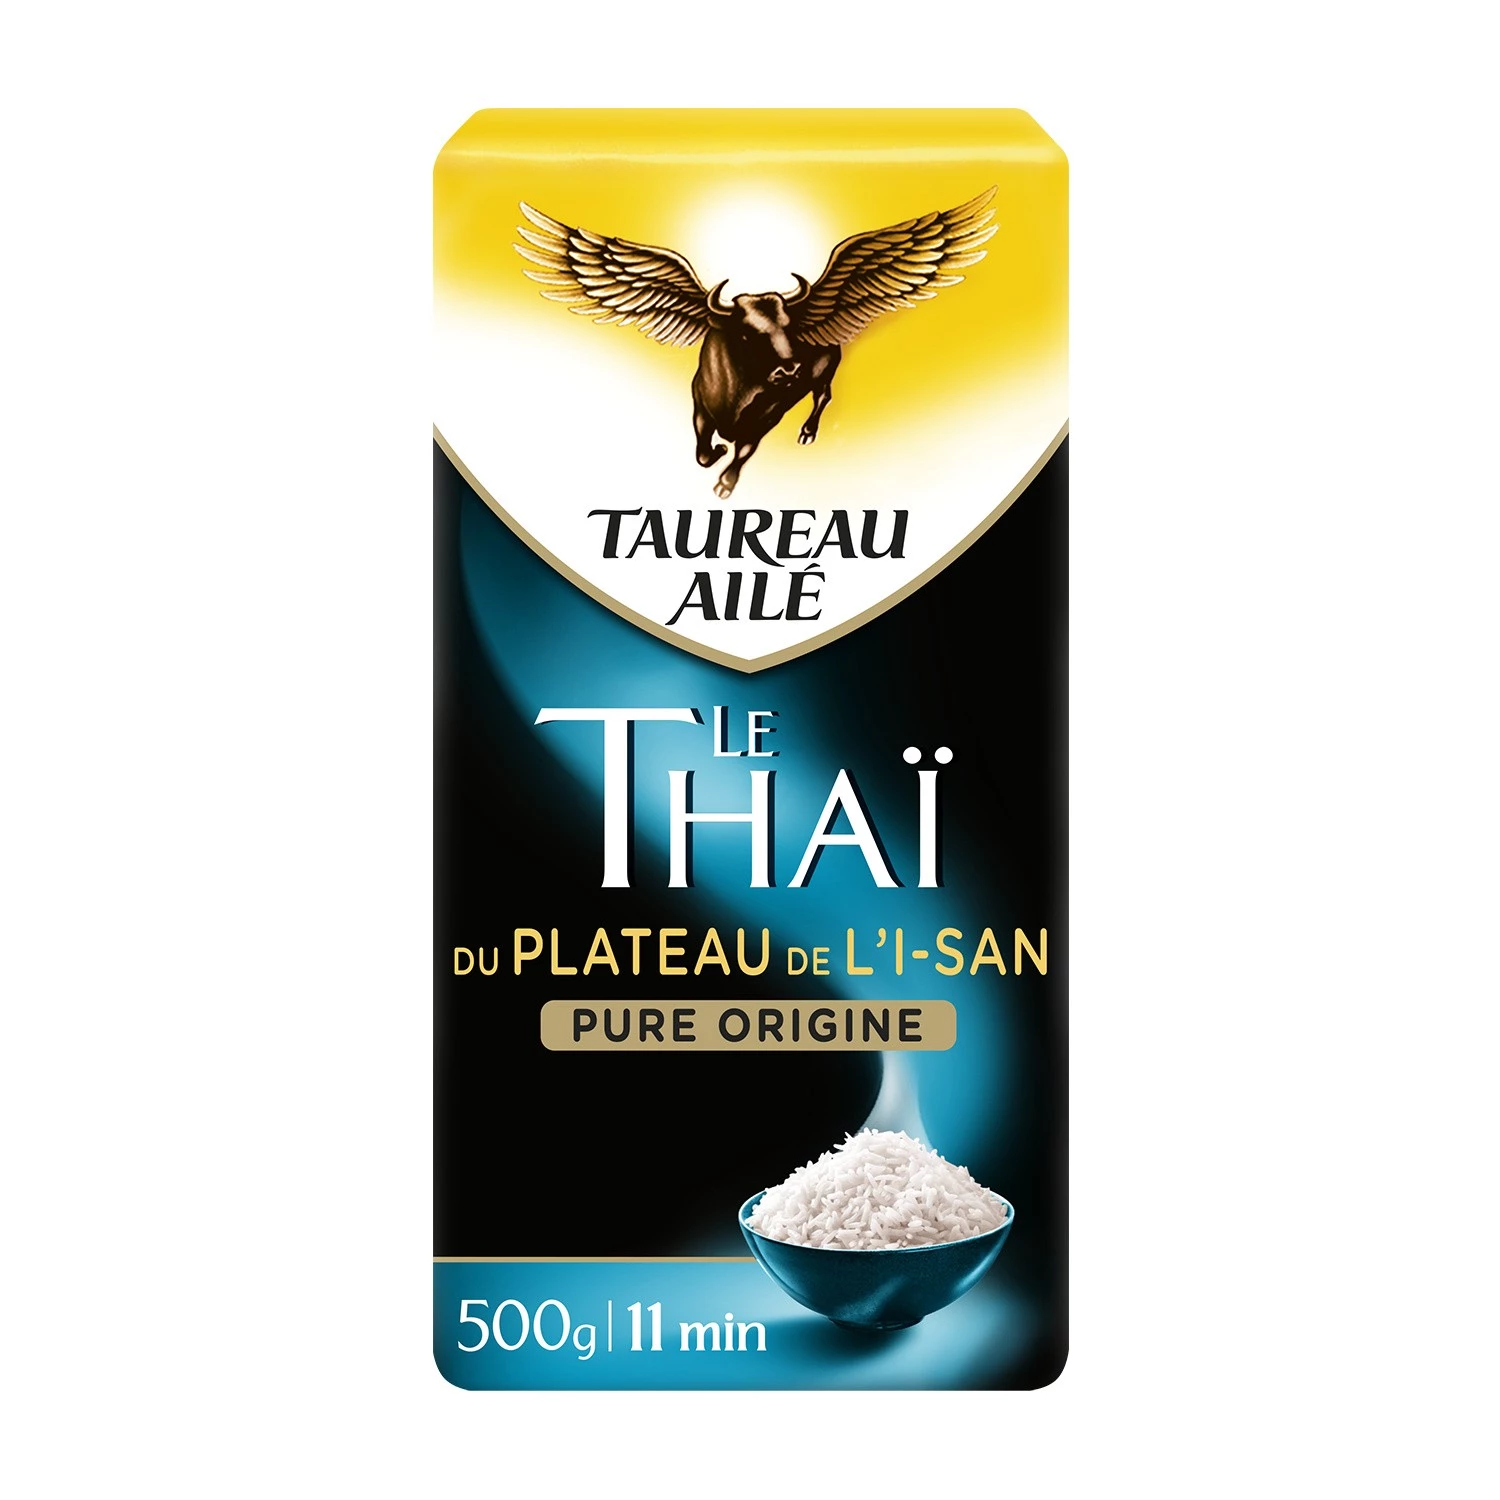 Тайский рис с плато Исан, 500г - TAUREAU AILÉ